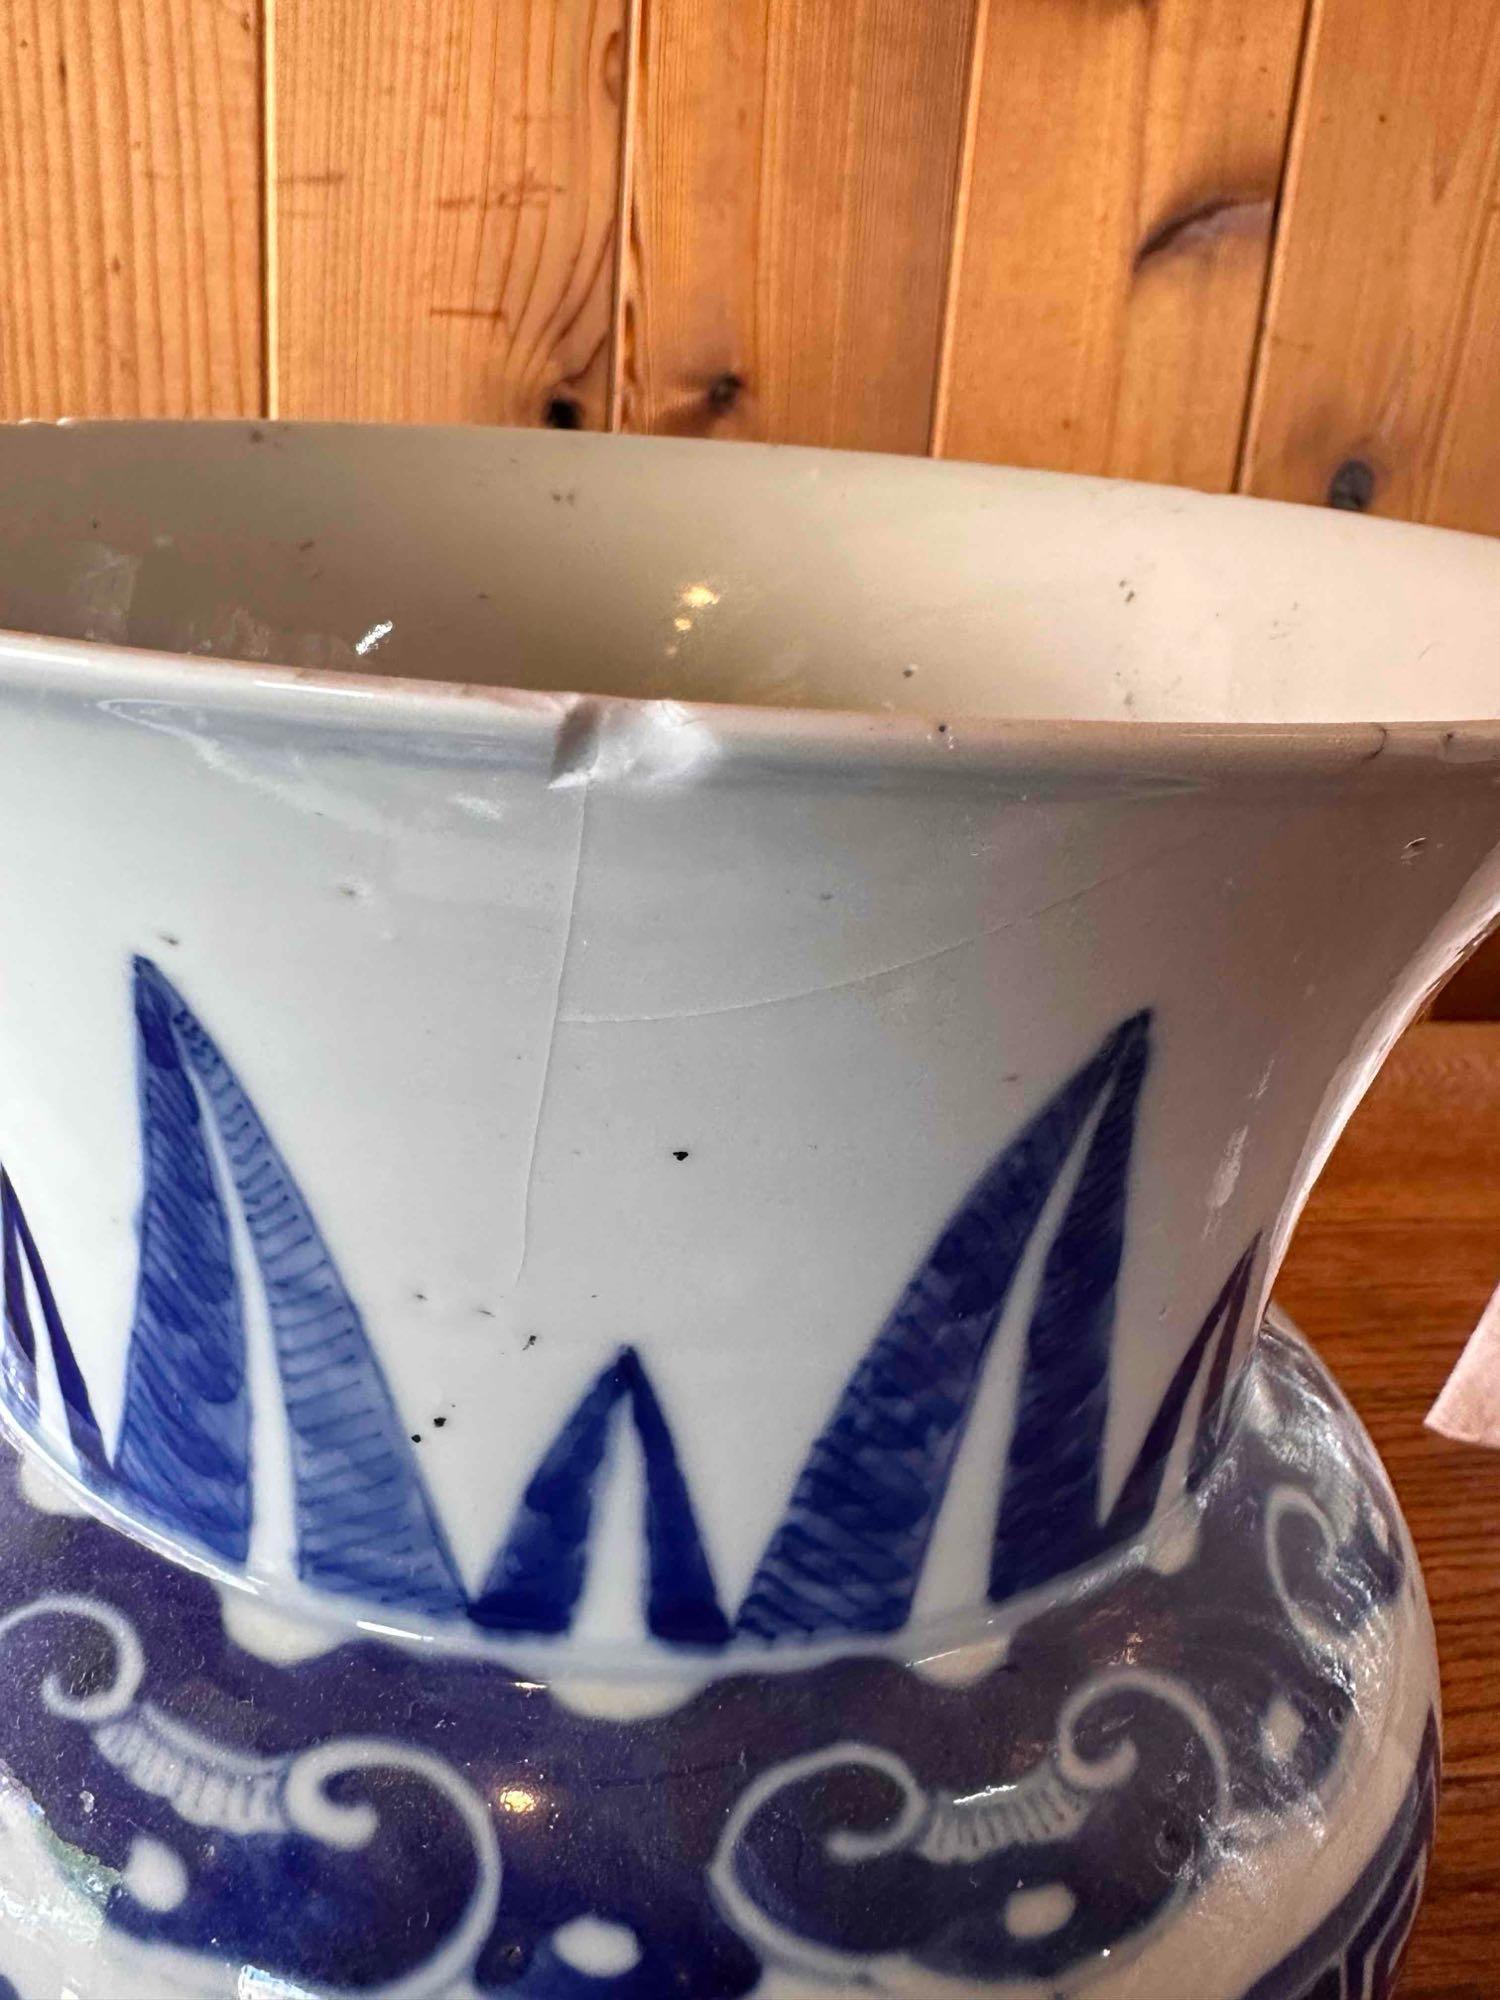 Ceramic Chinese Blue Pot